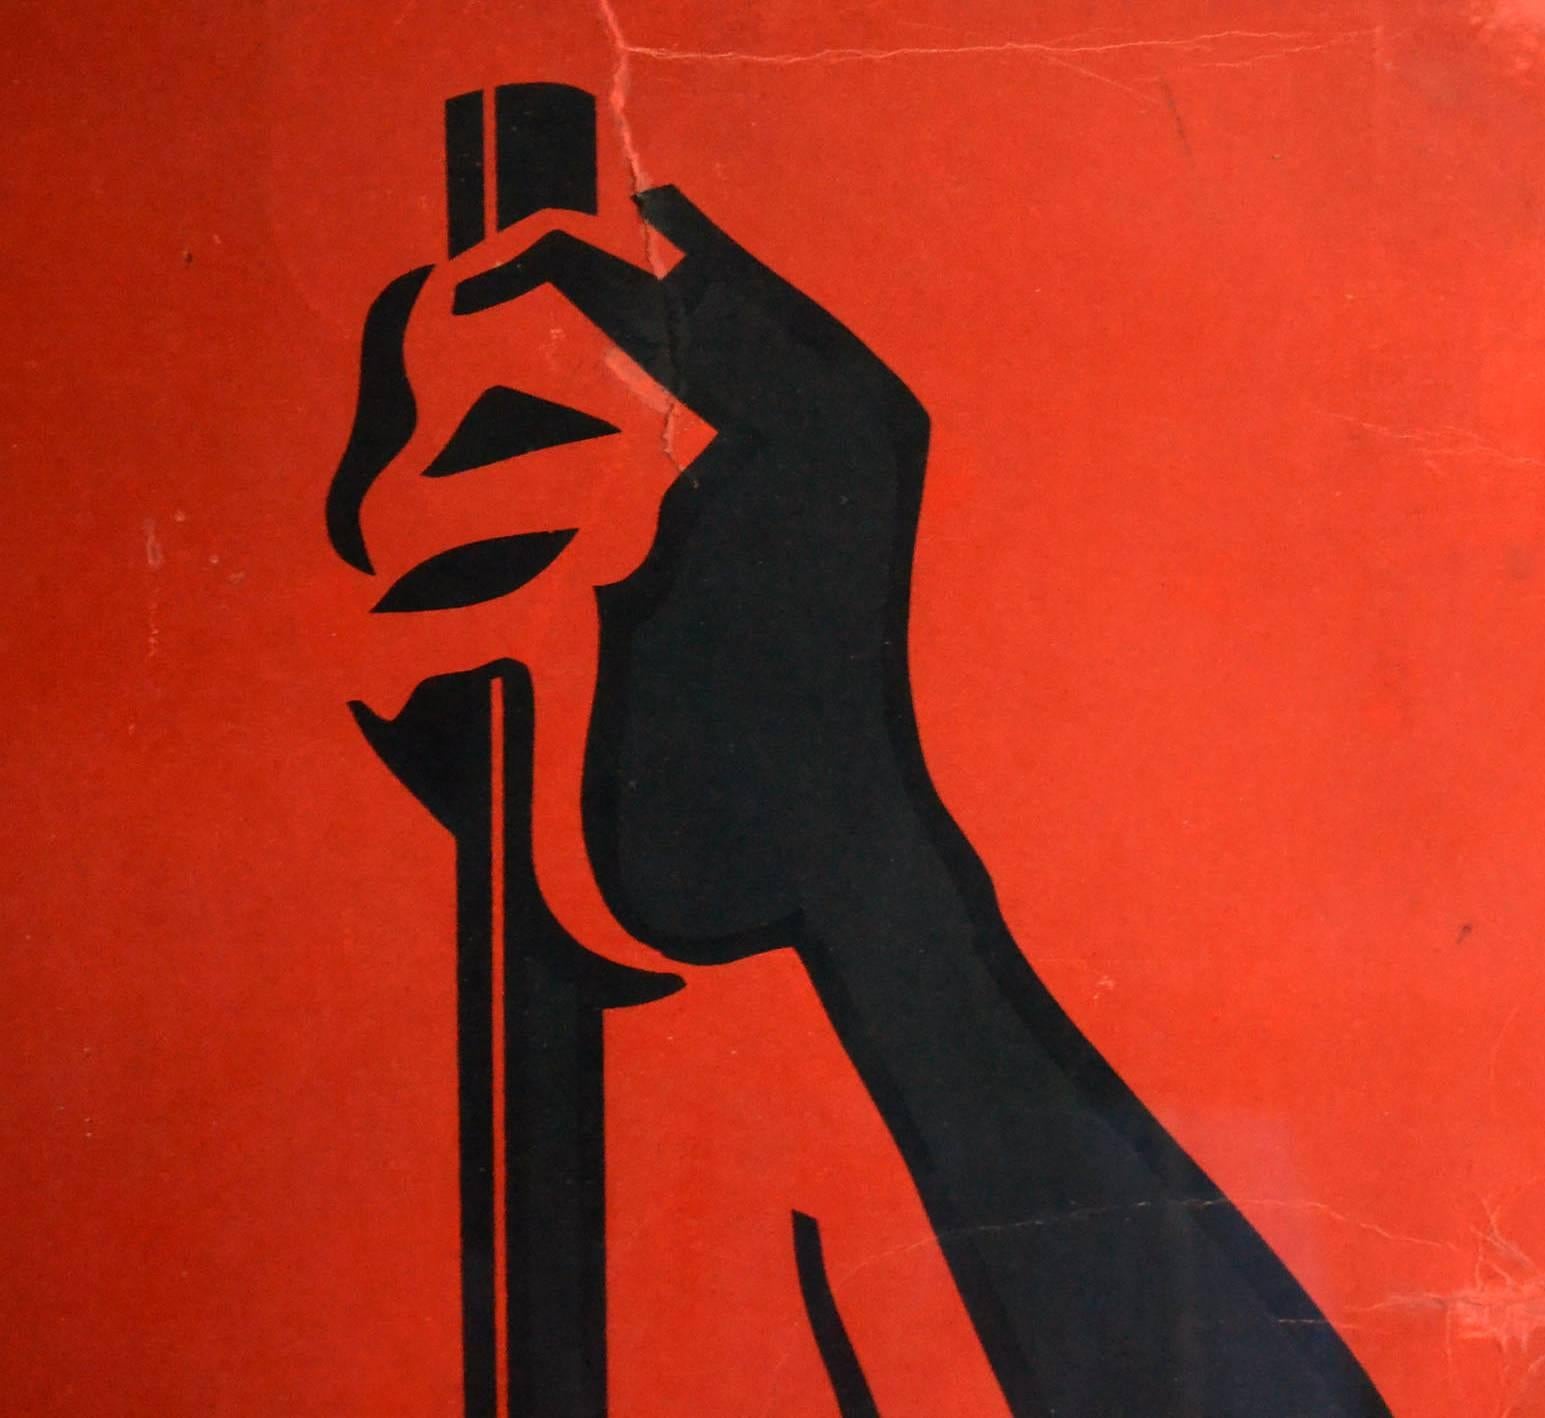 Belgian Art Deco Poster Advertising Ciney Belgium Ovens in Red and Black